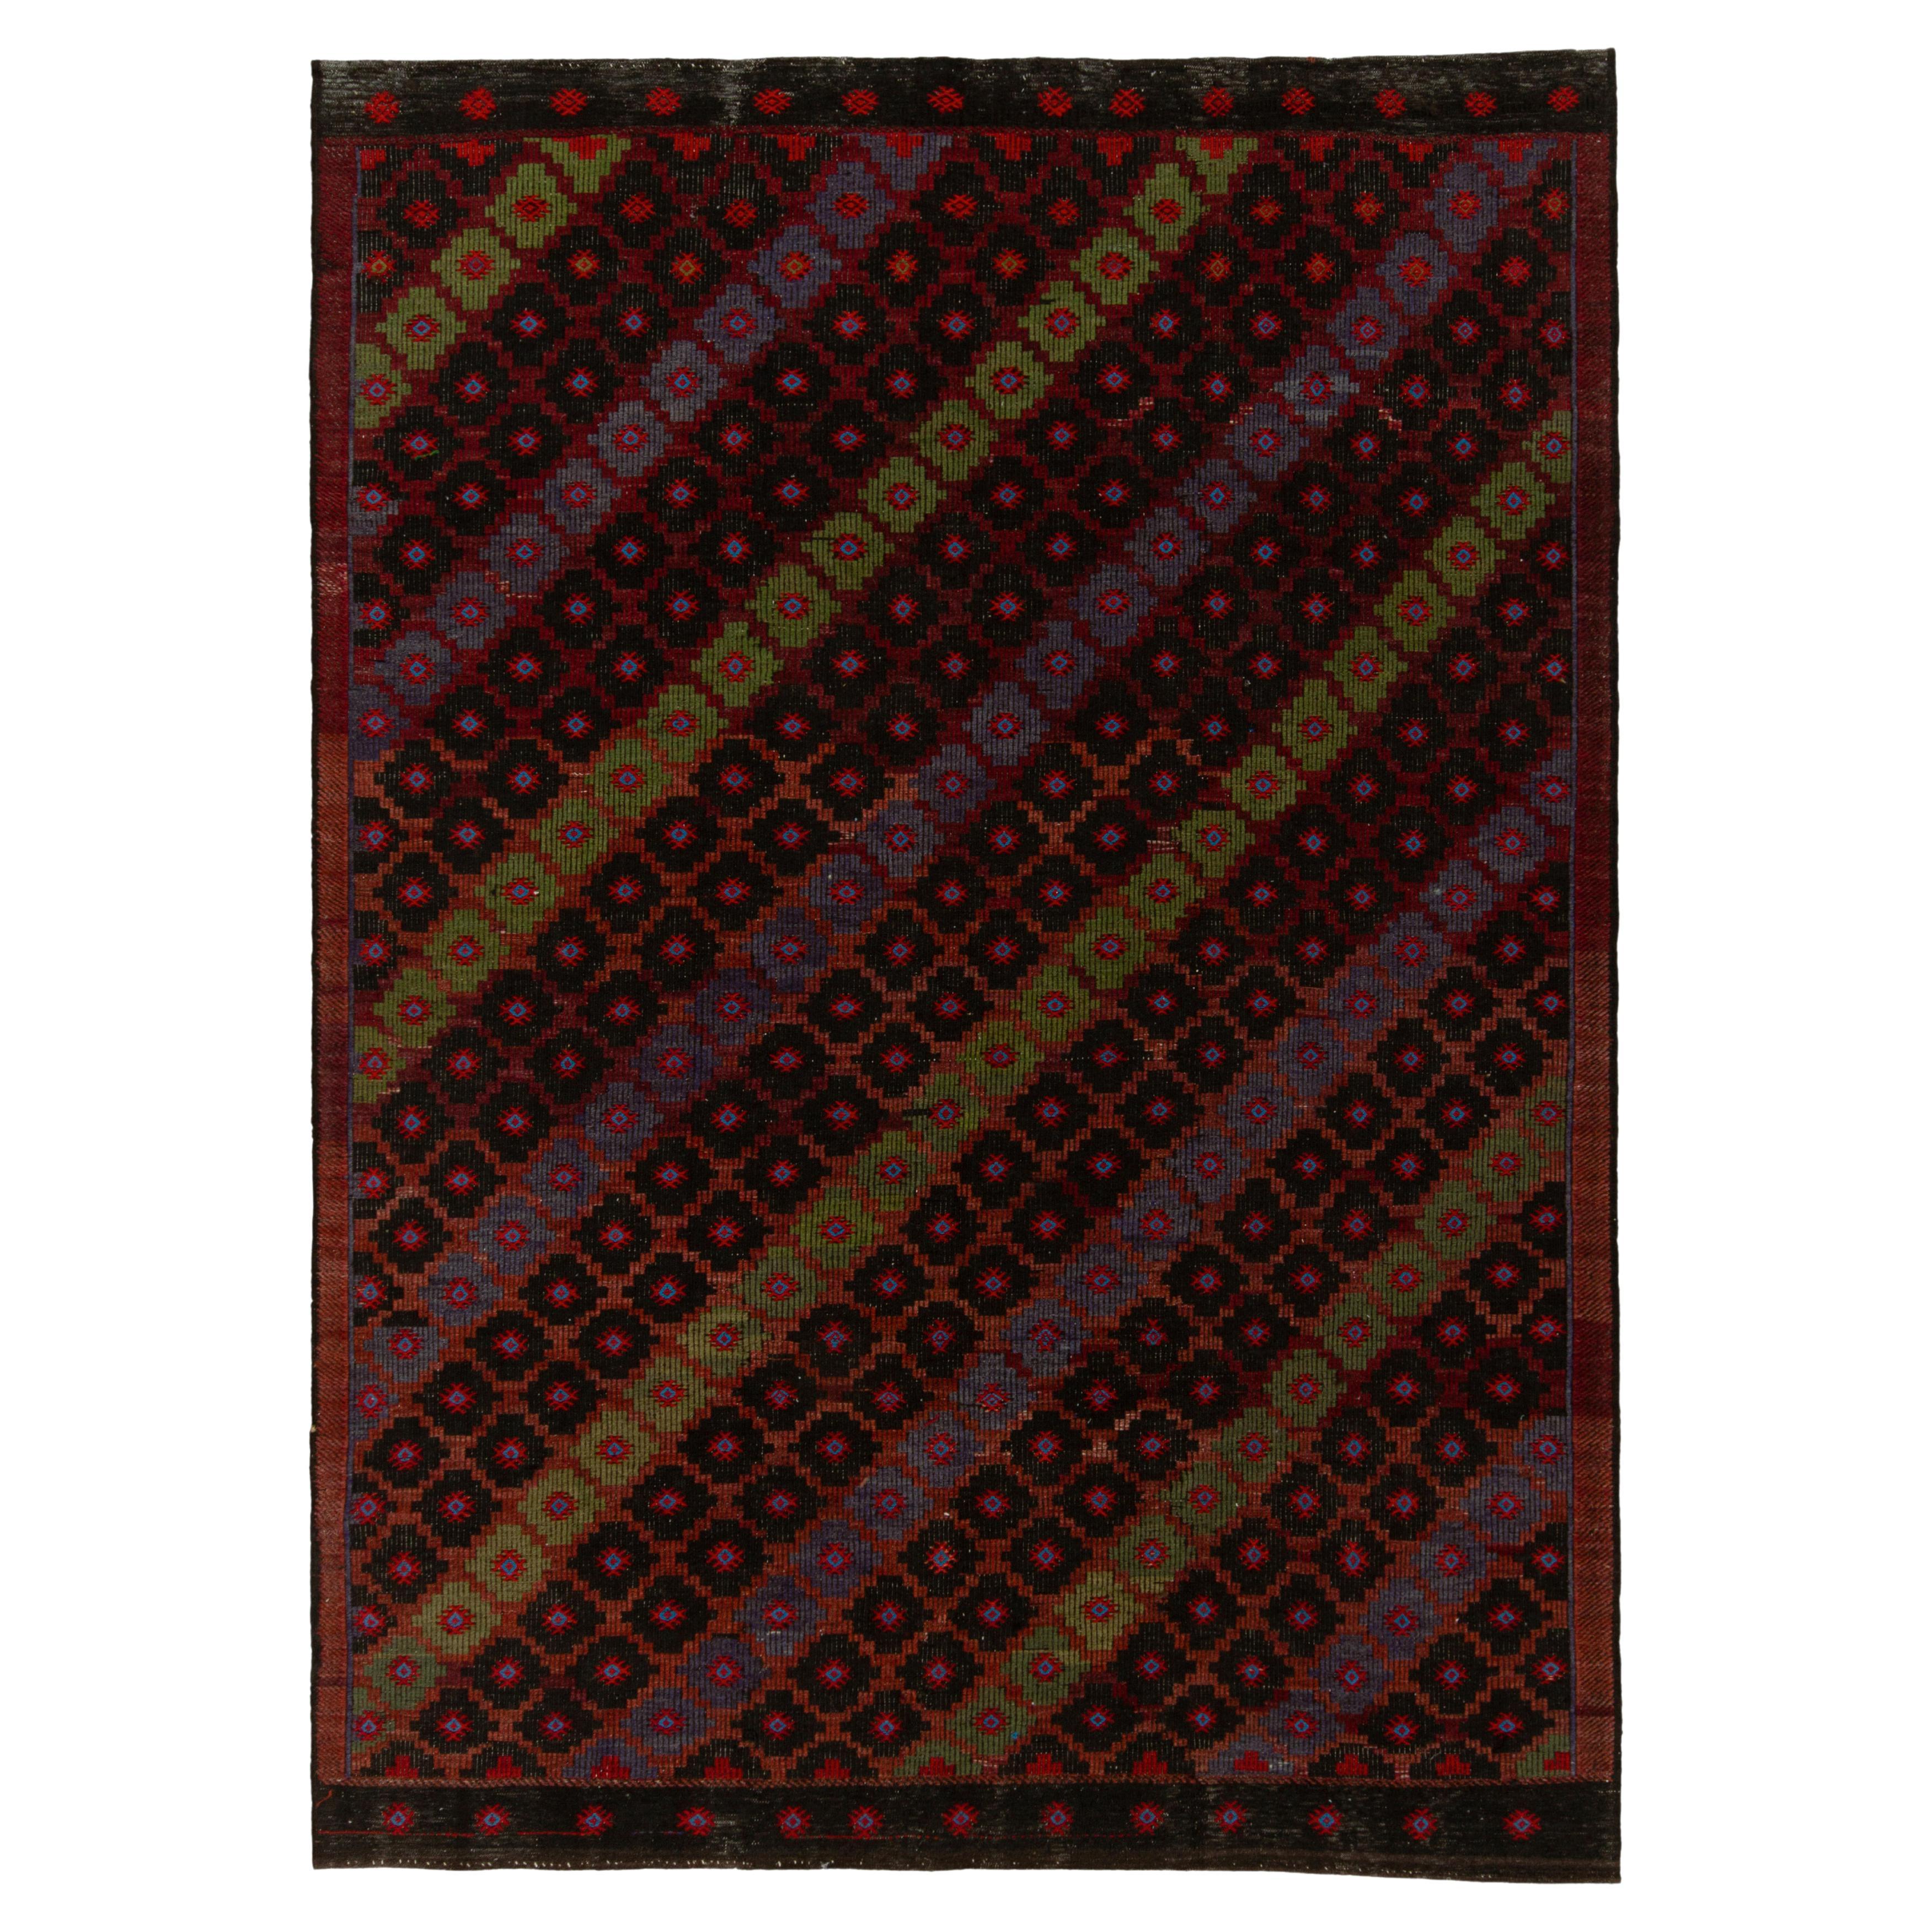 Vintage Cecim Tribal Kilim in Black and Red Geometric Patterns by Rug & Kilim